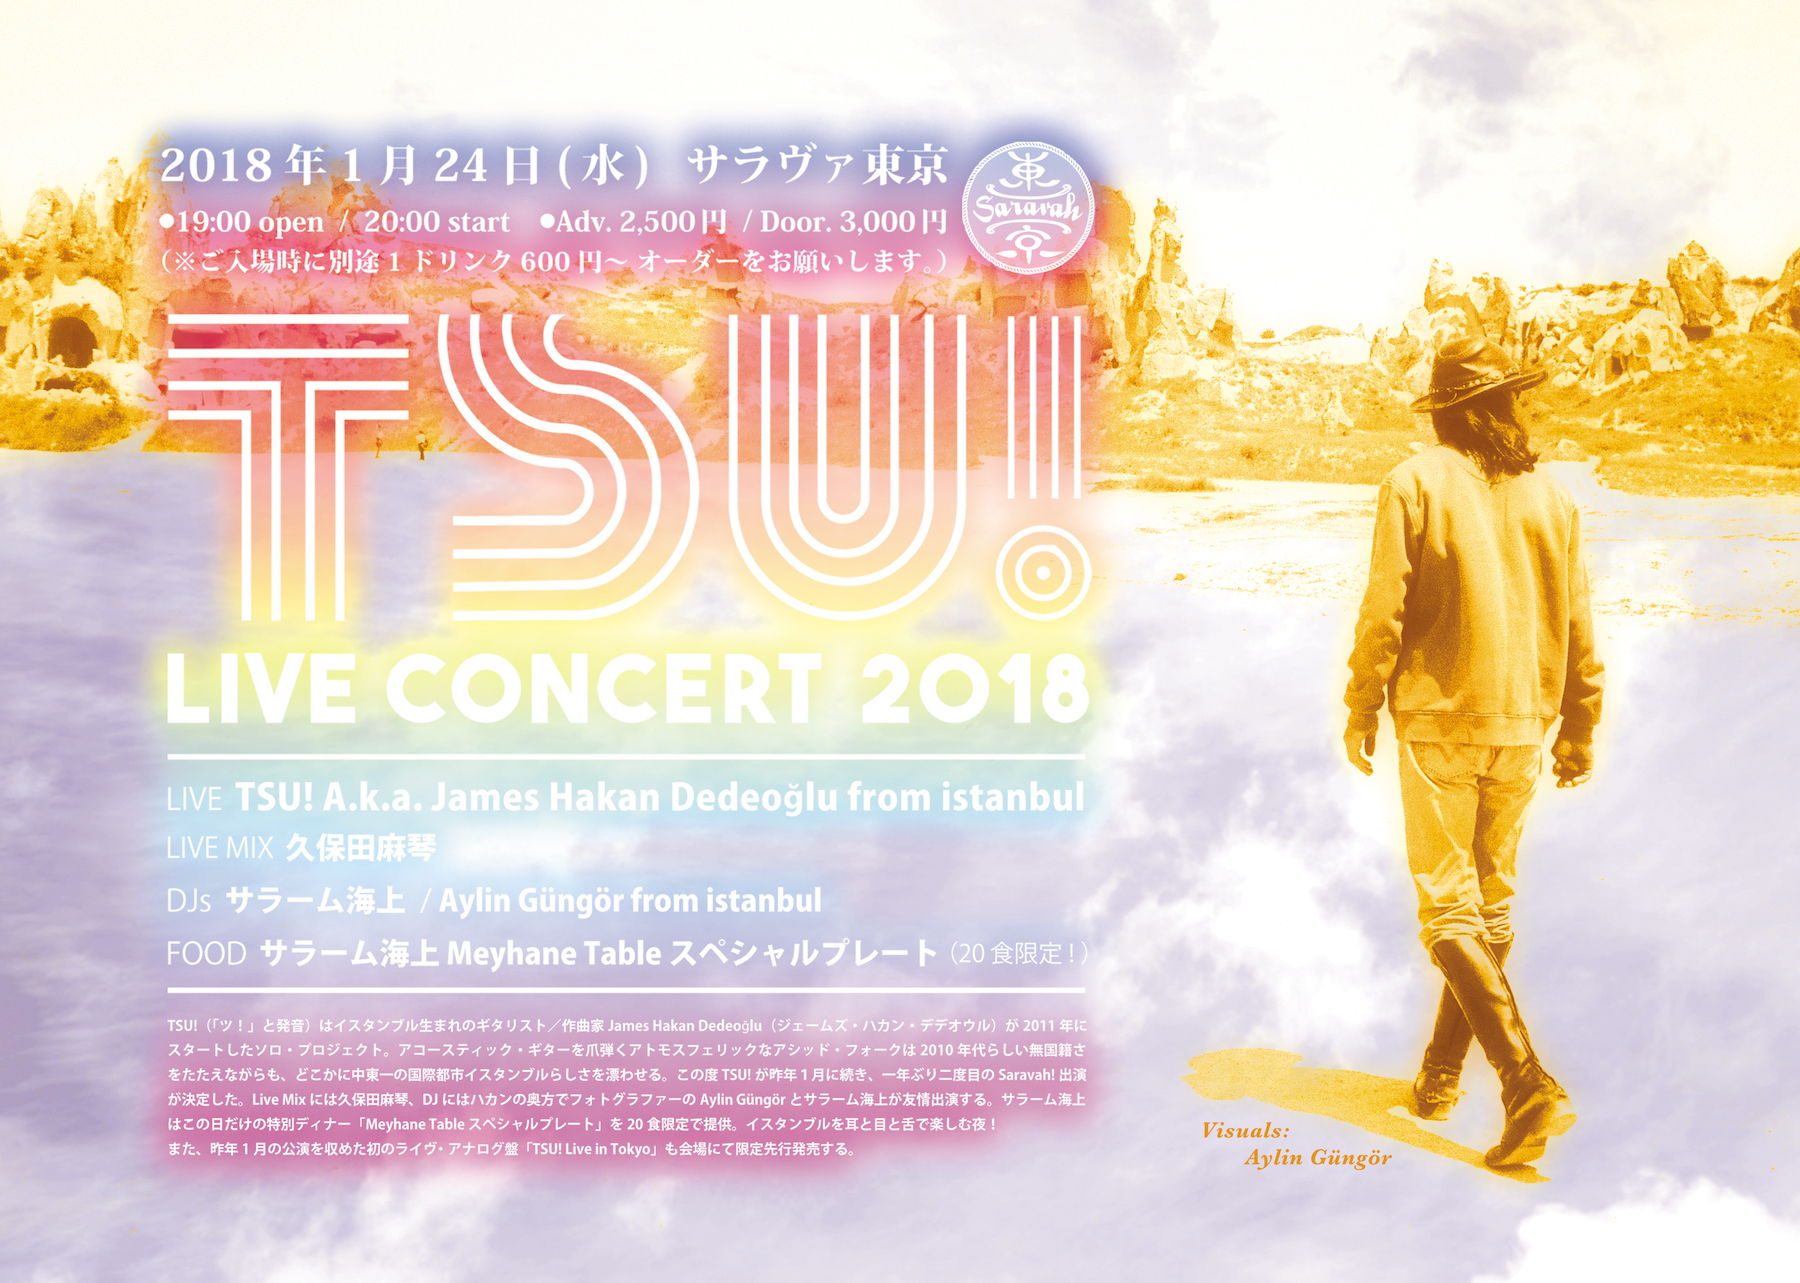 20180124Wed. TSU! Live Concert @Saravah東京